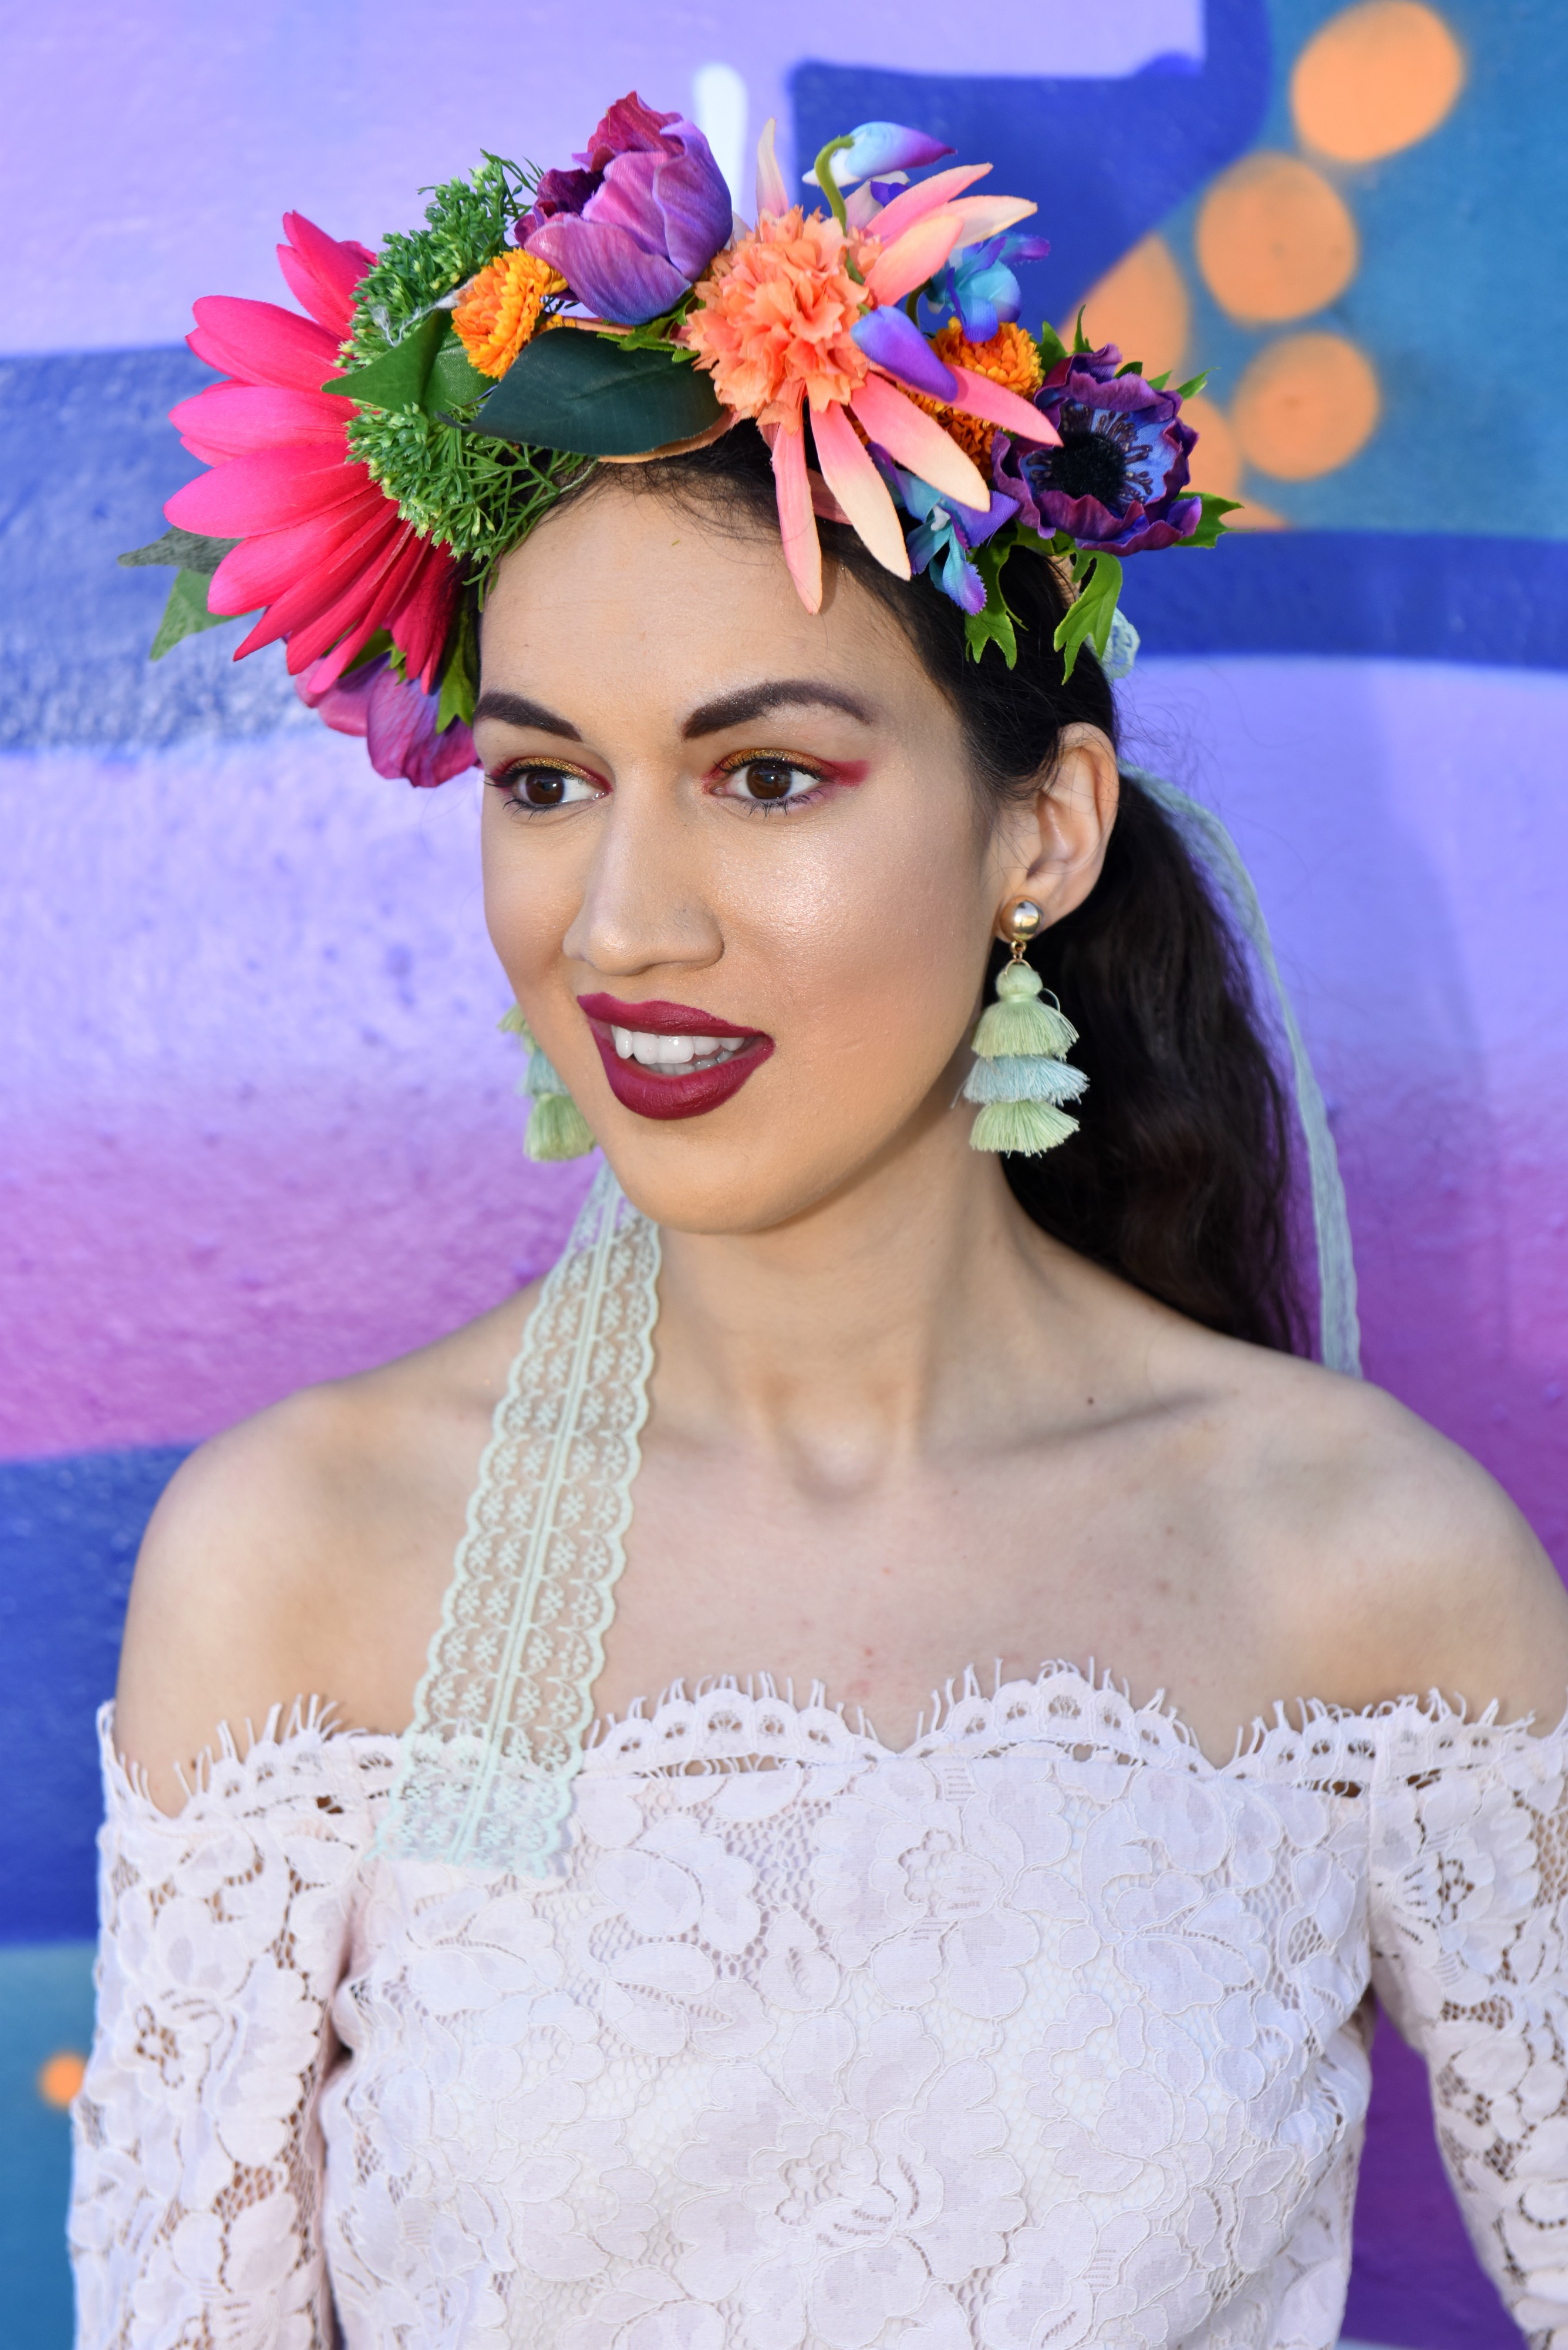  <img src="ana.jpg" alt="ana rainbow flower crown how to style a bridesmaid dress"/>